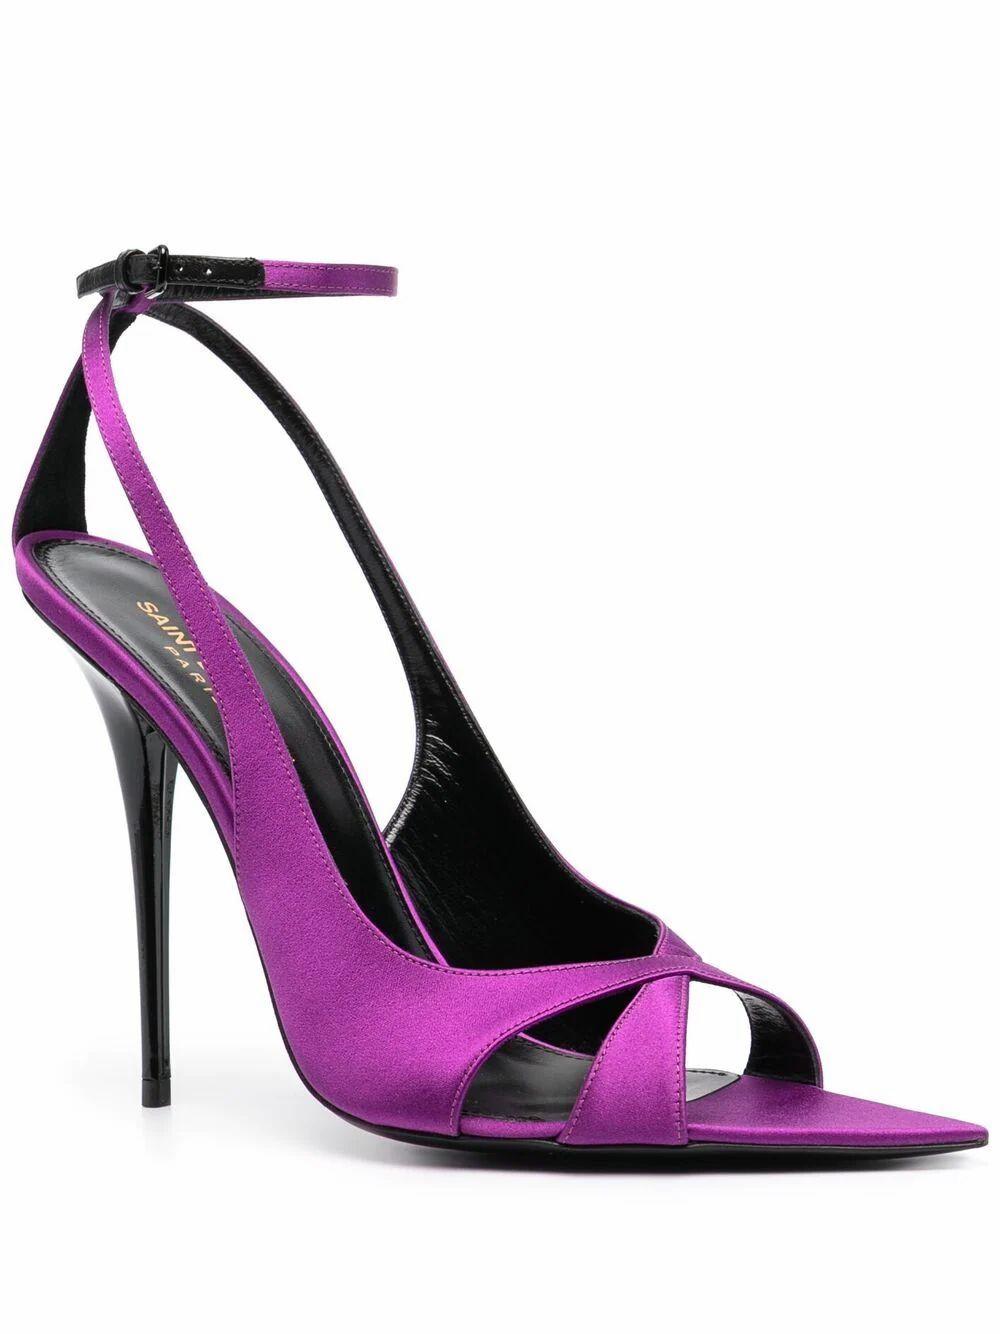 Purple Ankle-Strap High Heel Sandals | eBay